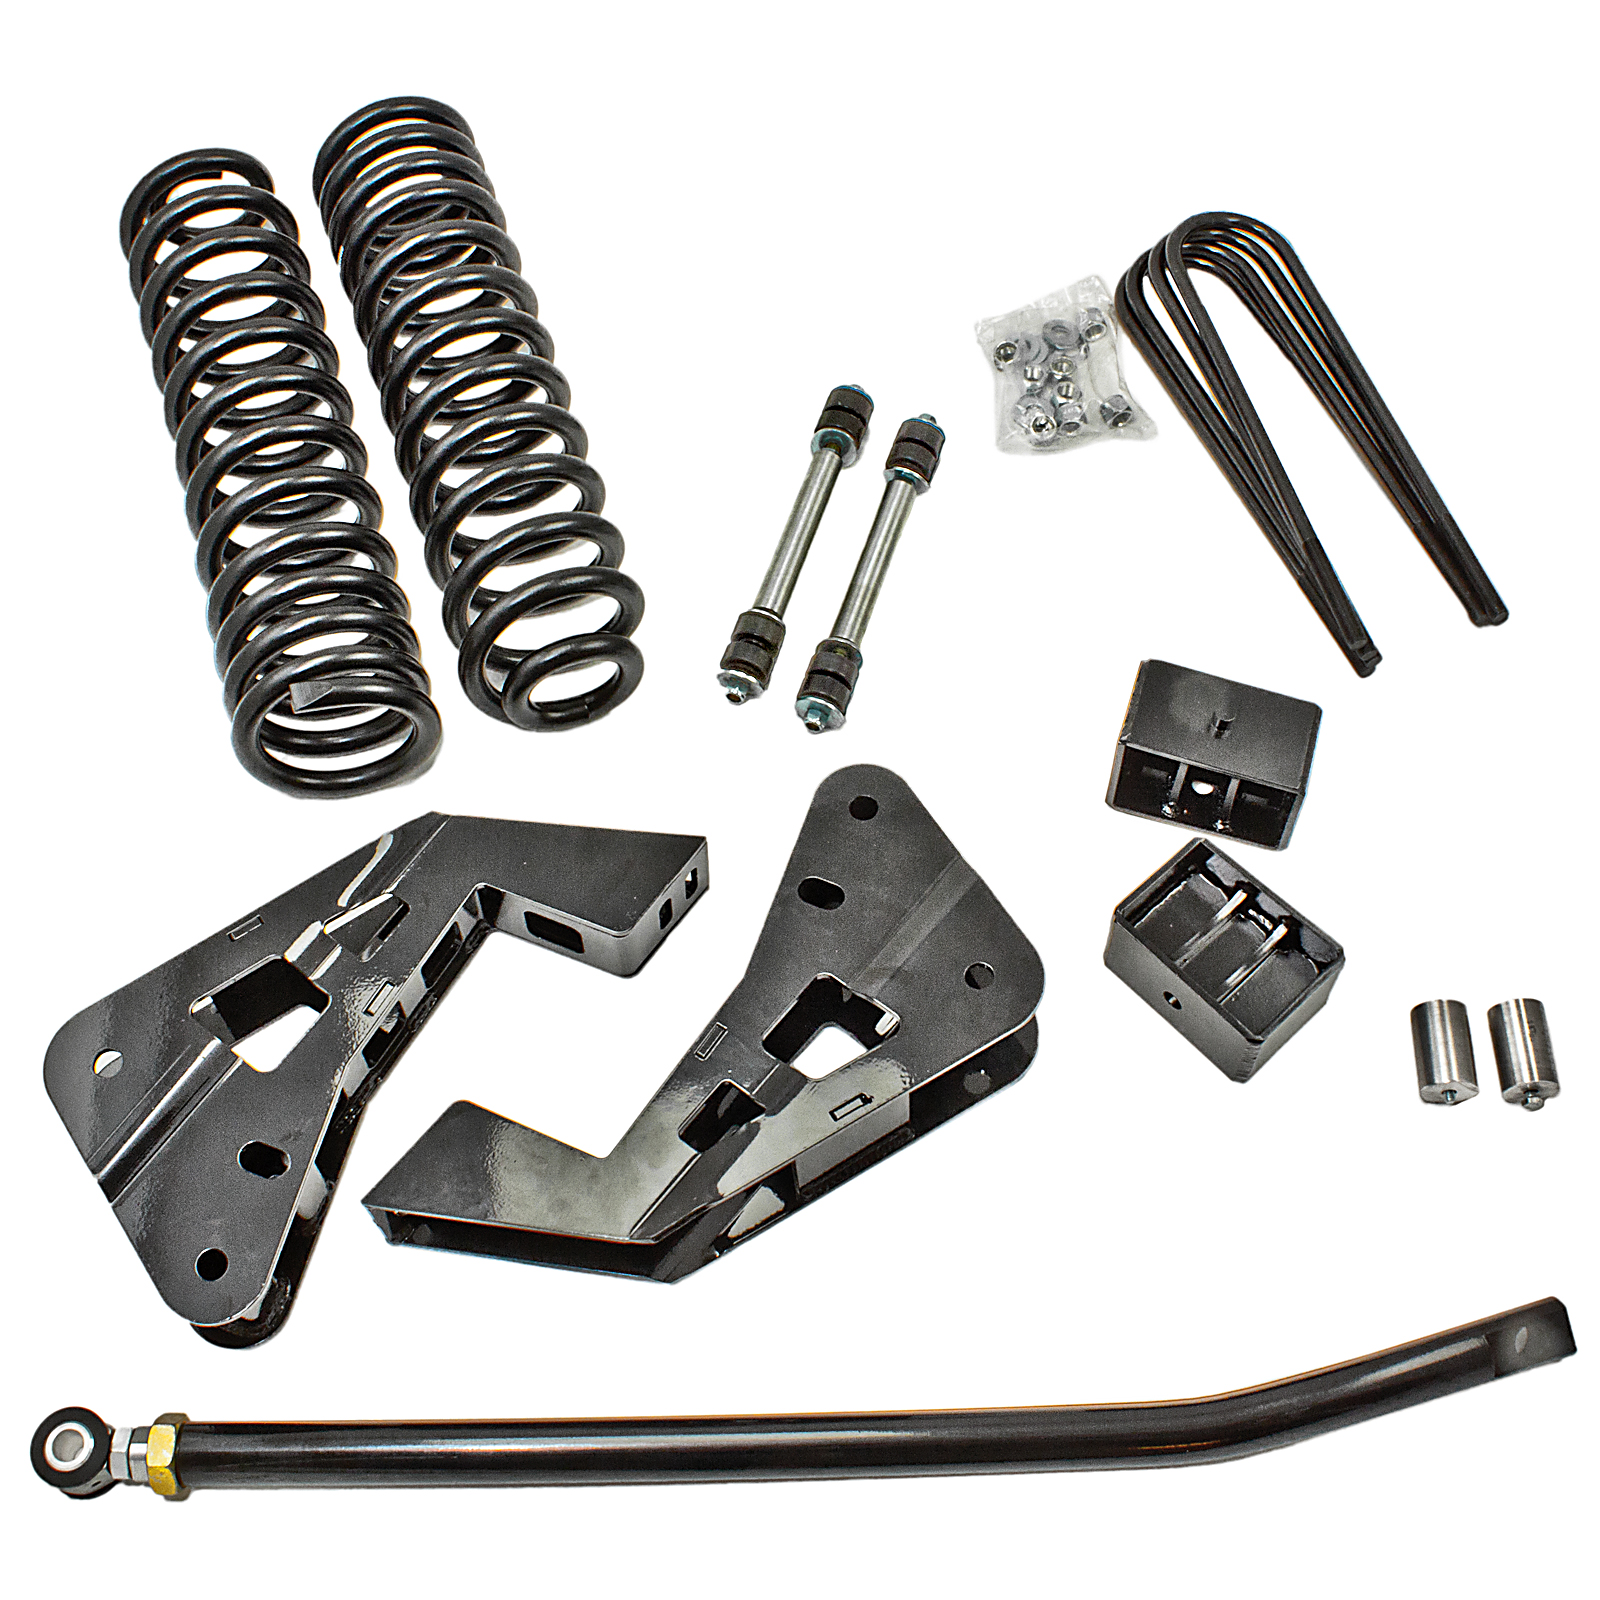 Ford Lift Kit For 2014 Ford F350 Truck Lift Kits 